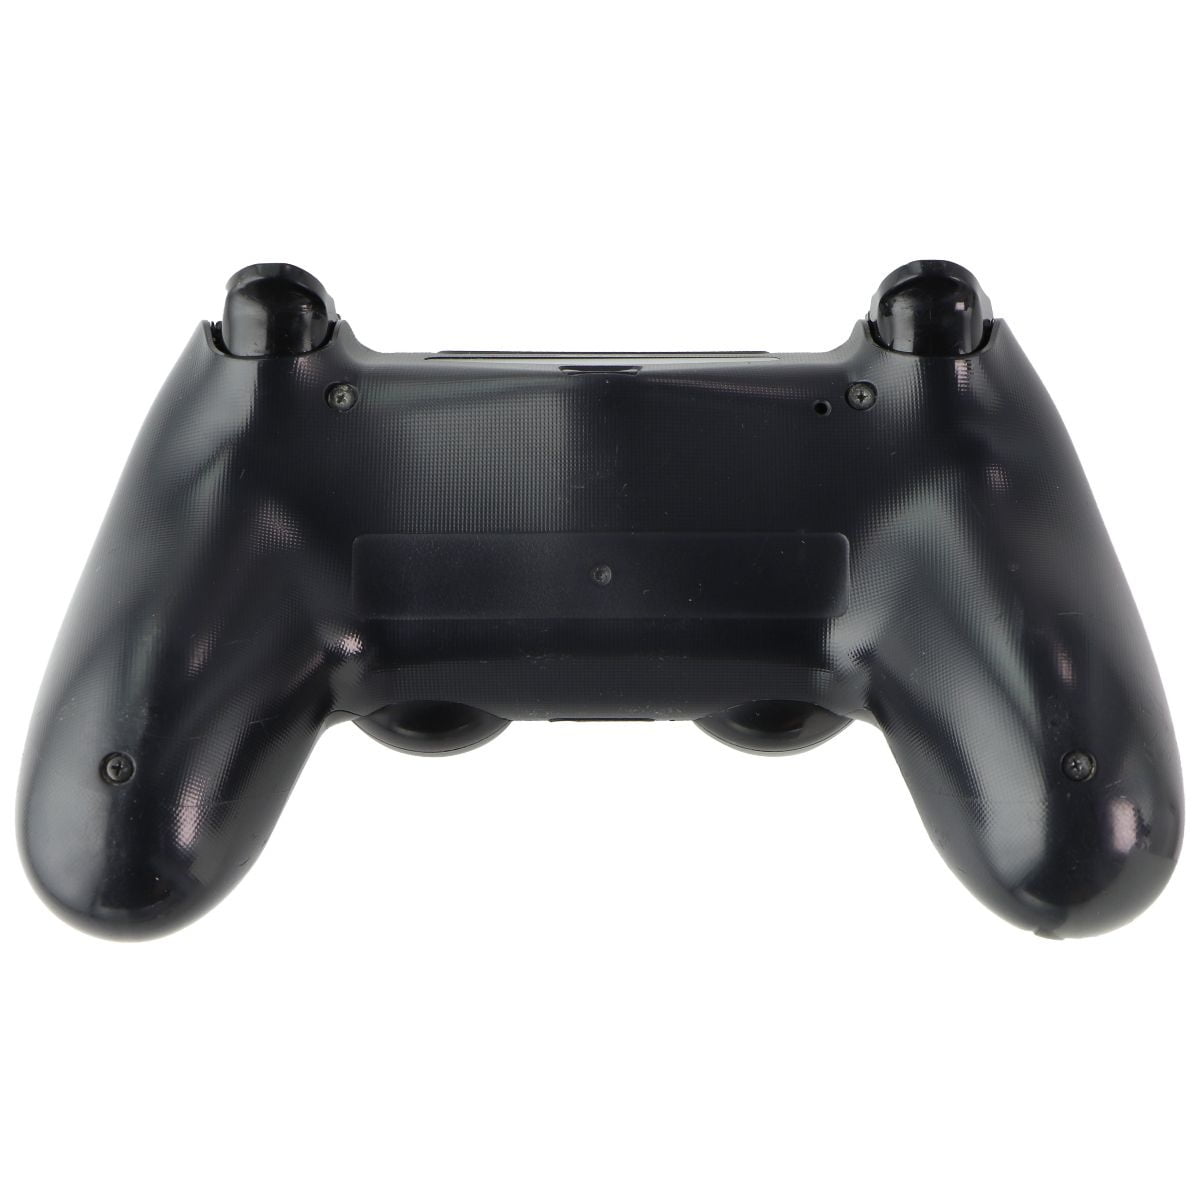 Sony DualShock 4 Mando Inalámbrico para PlayStation 4 (CUH-ZCT2E)